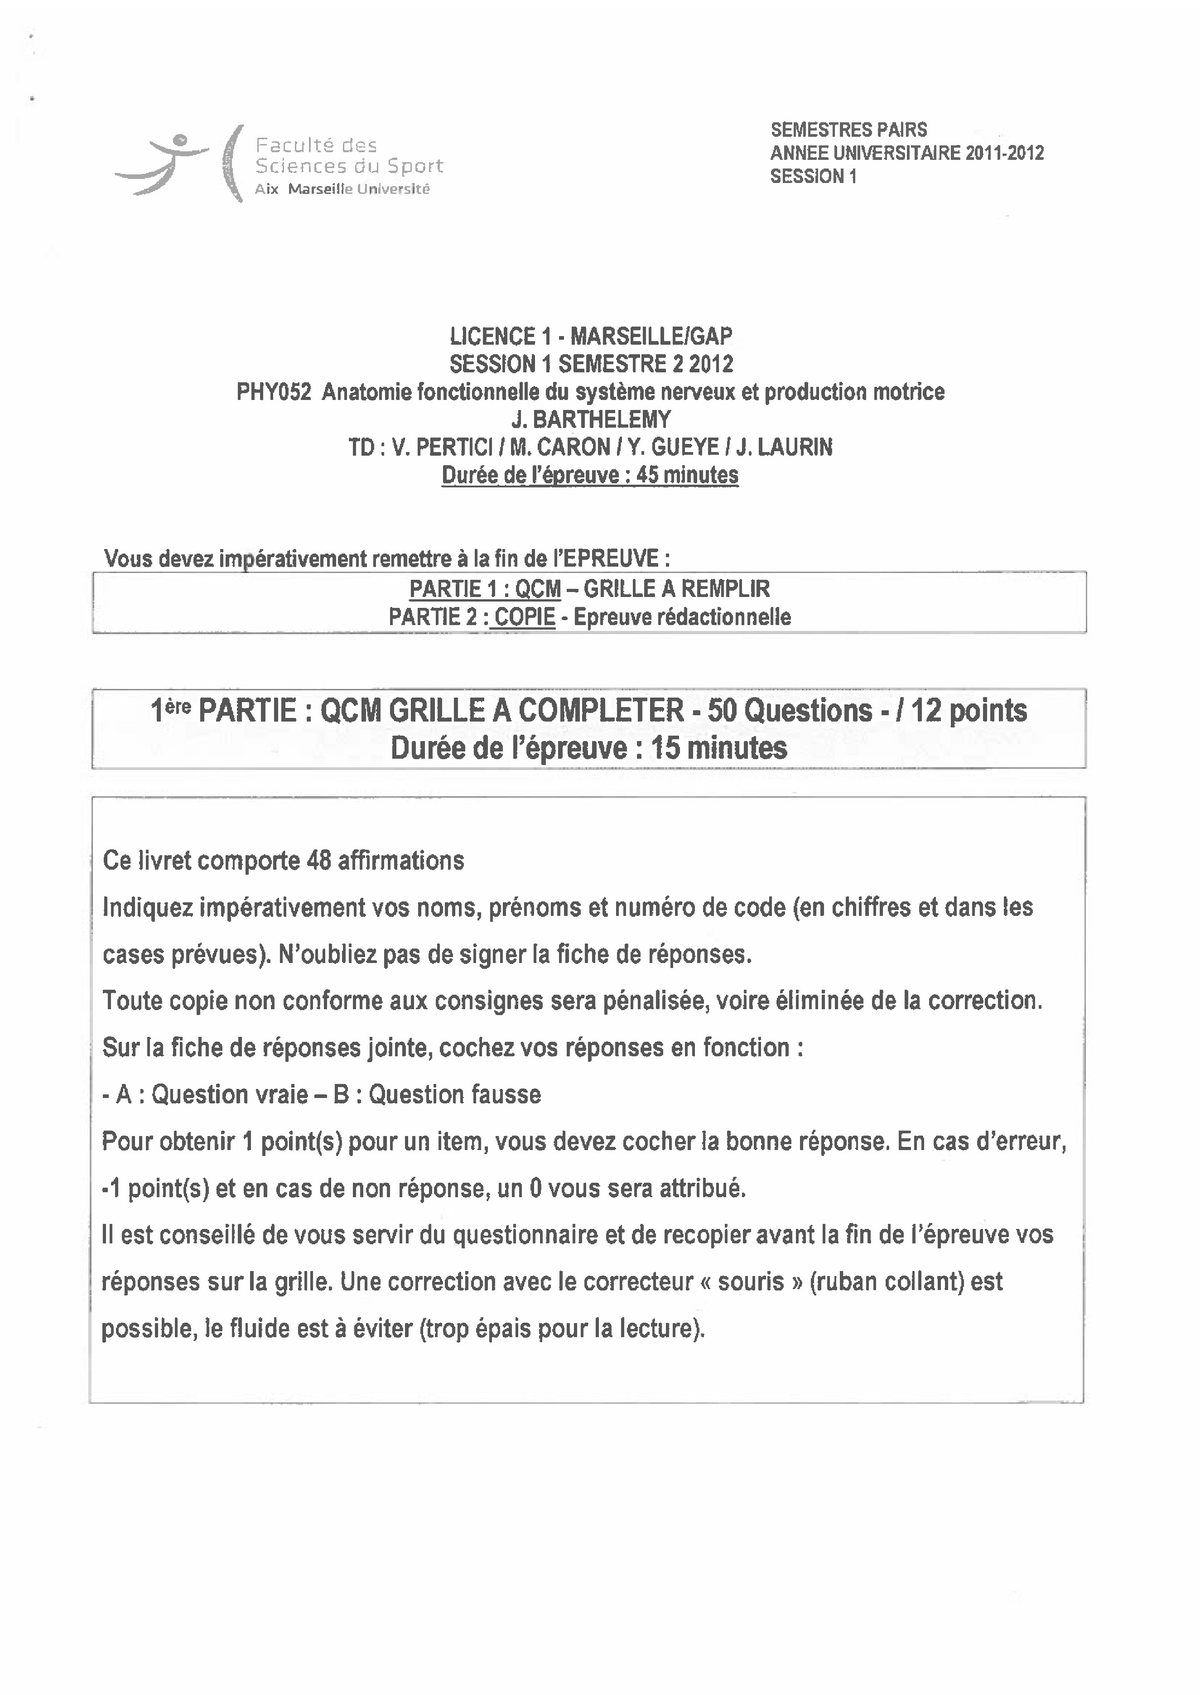 Sujets d'examen Staps Licence 1 - 2012 - Marseille - Studocu